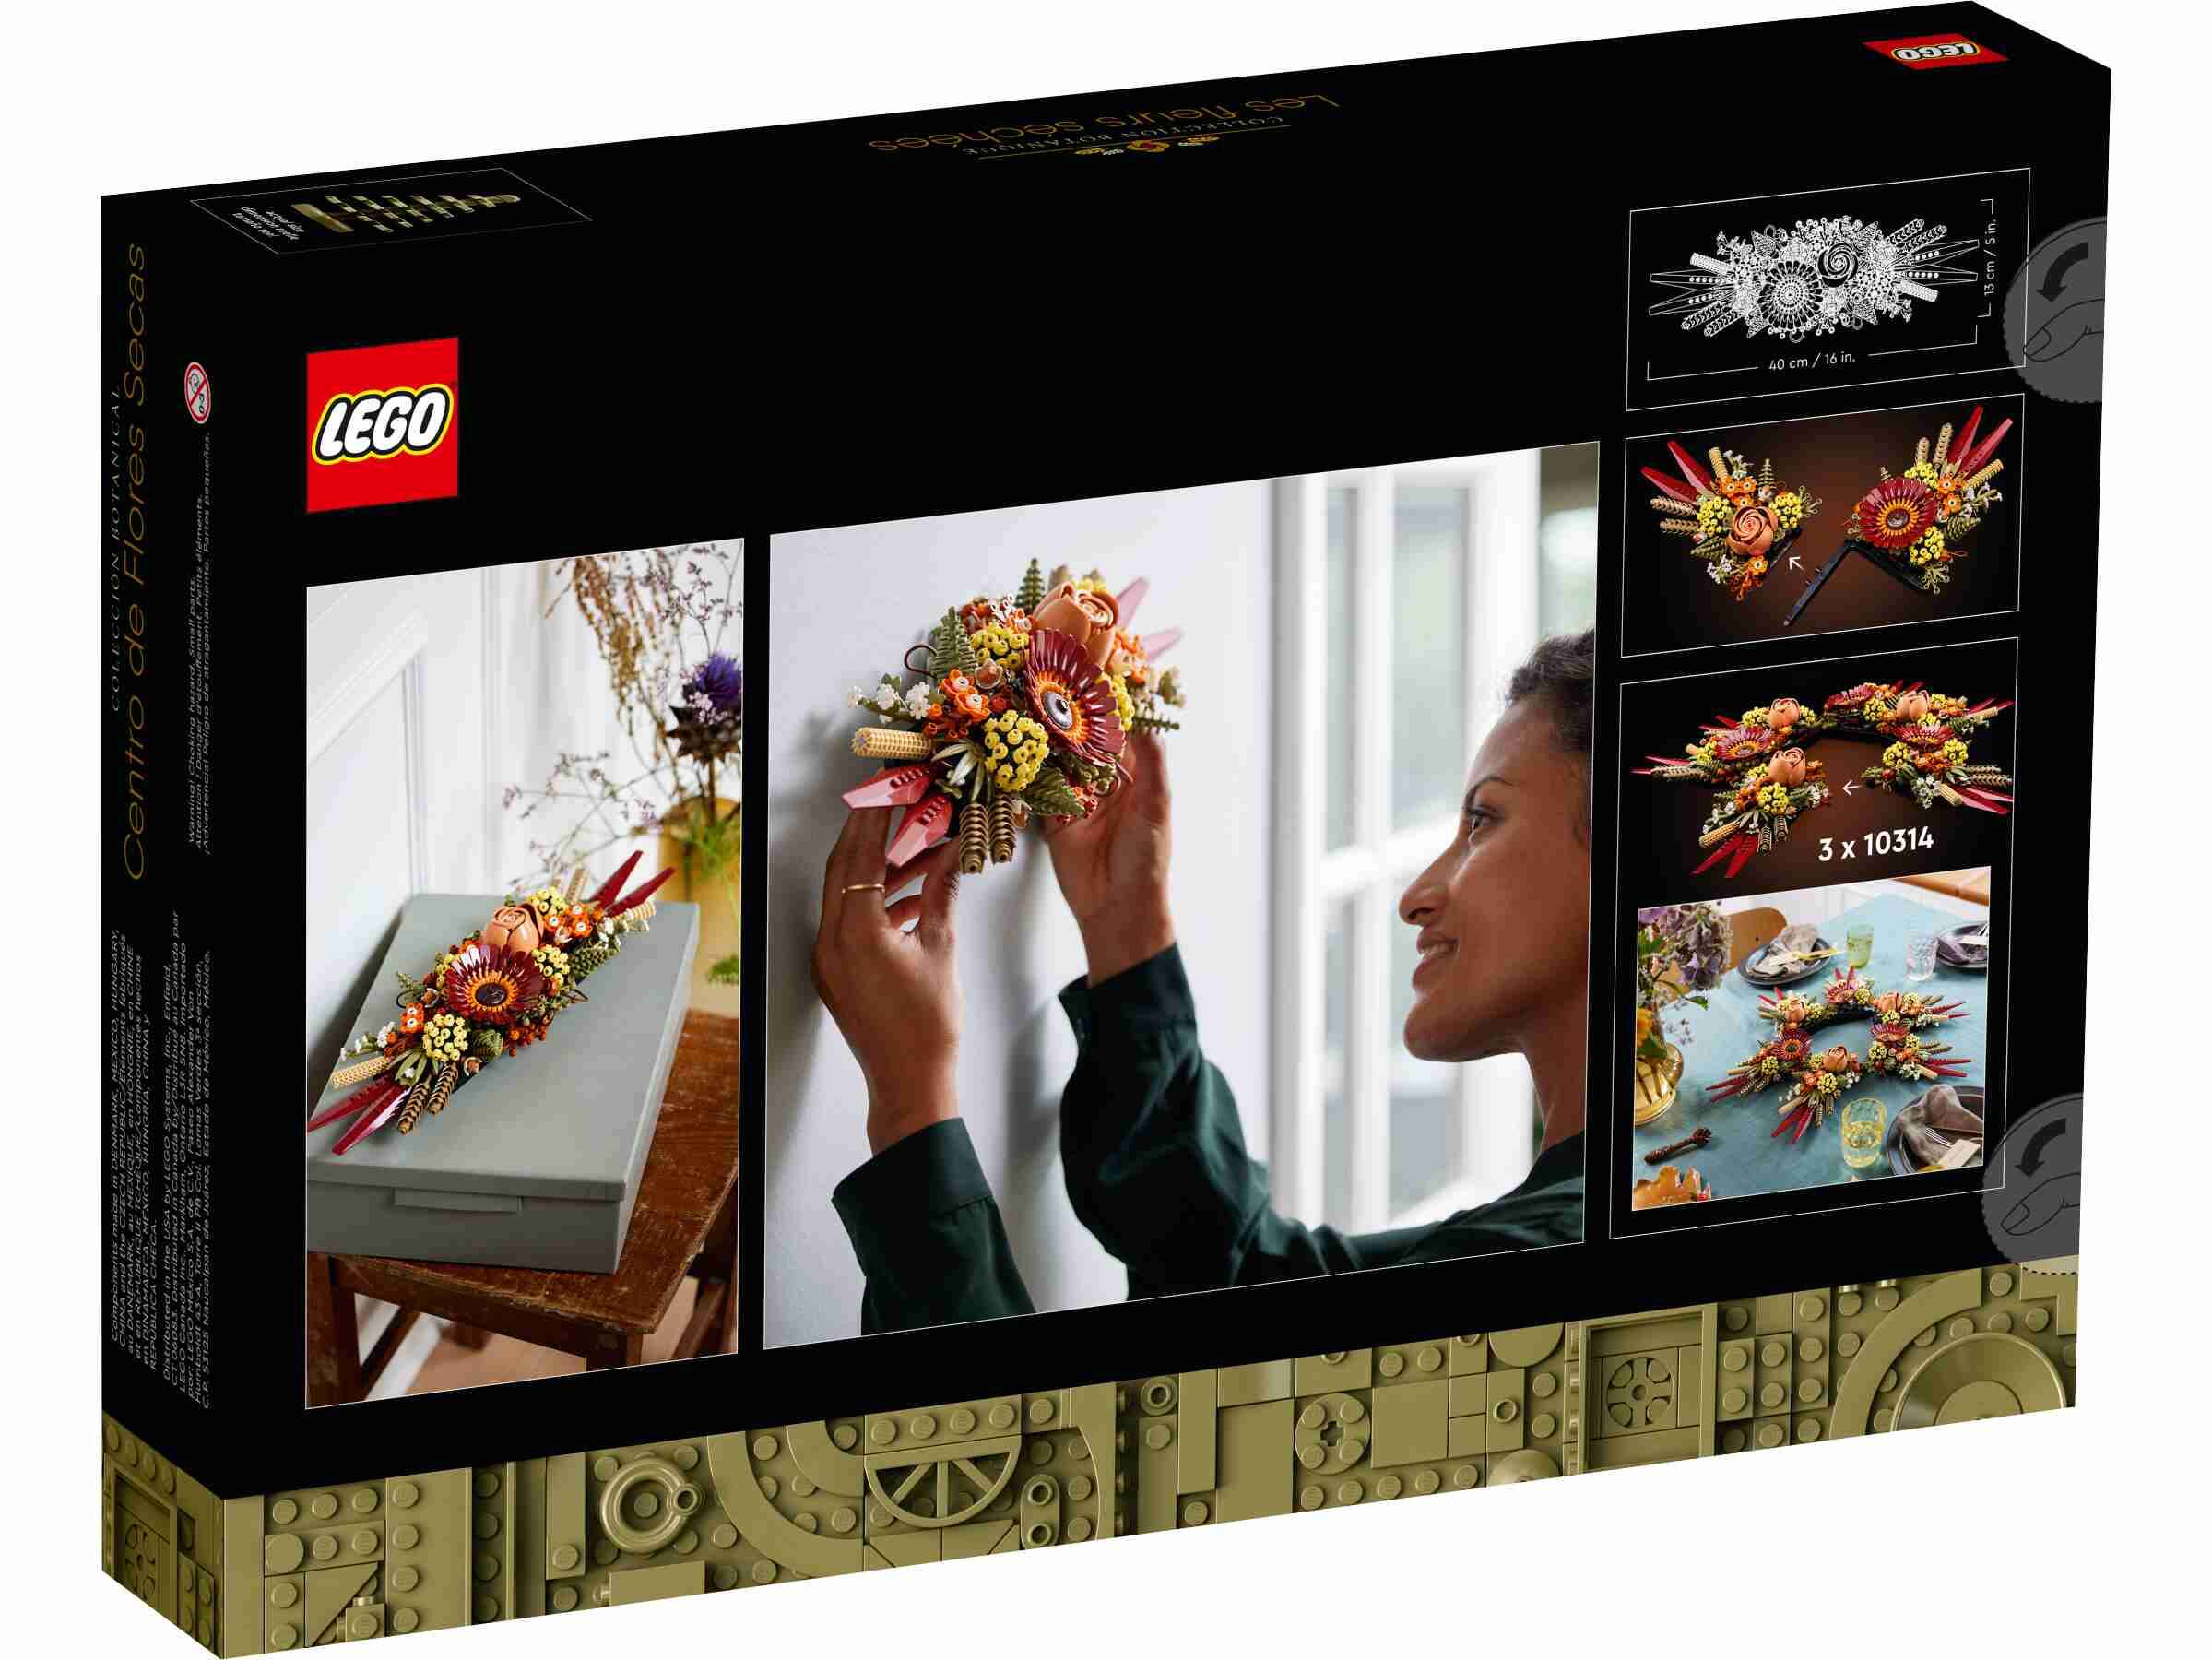 LEGO 10314 Icons Trockenblumengesteck, Botanik Kollektion, Gemeinschaftsprojekt